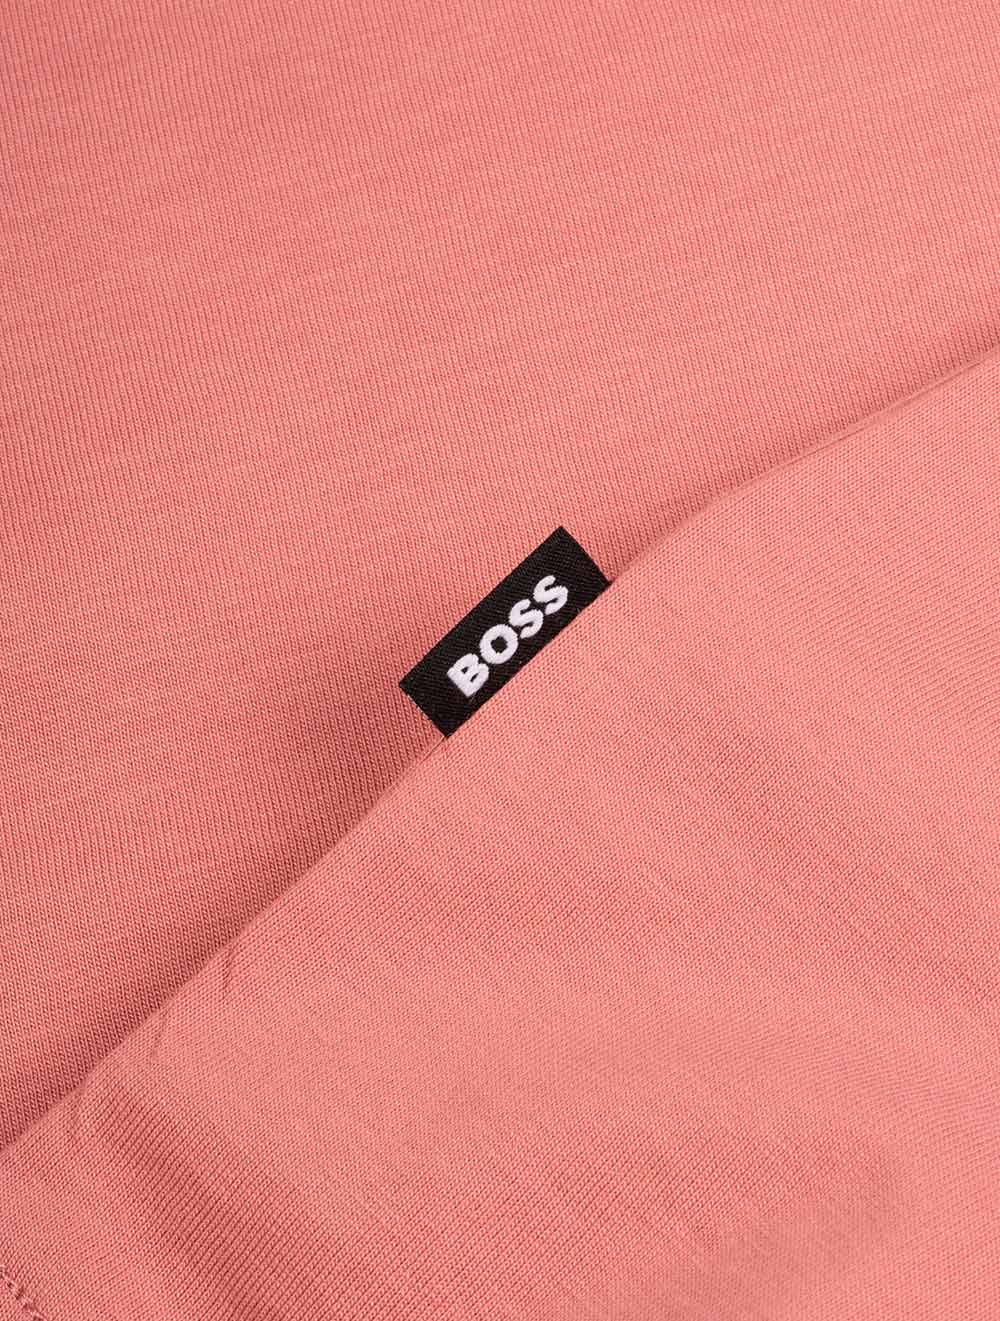 Hugo Boss Thompson 01 T-shirt Pink